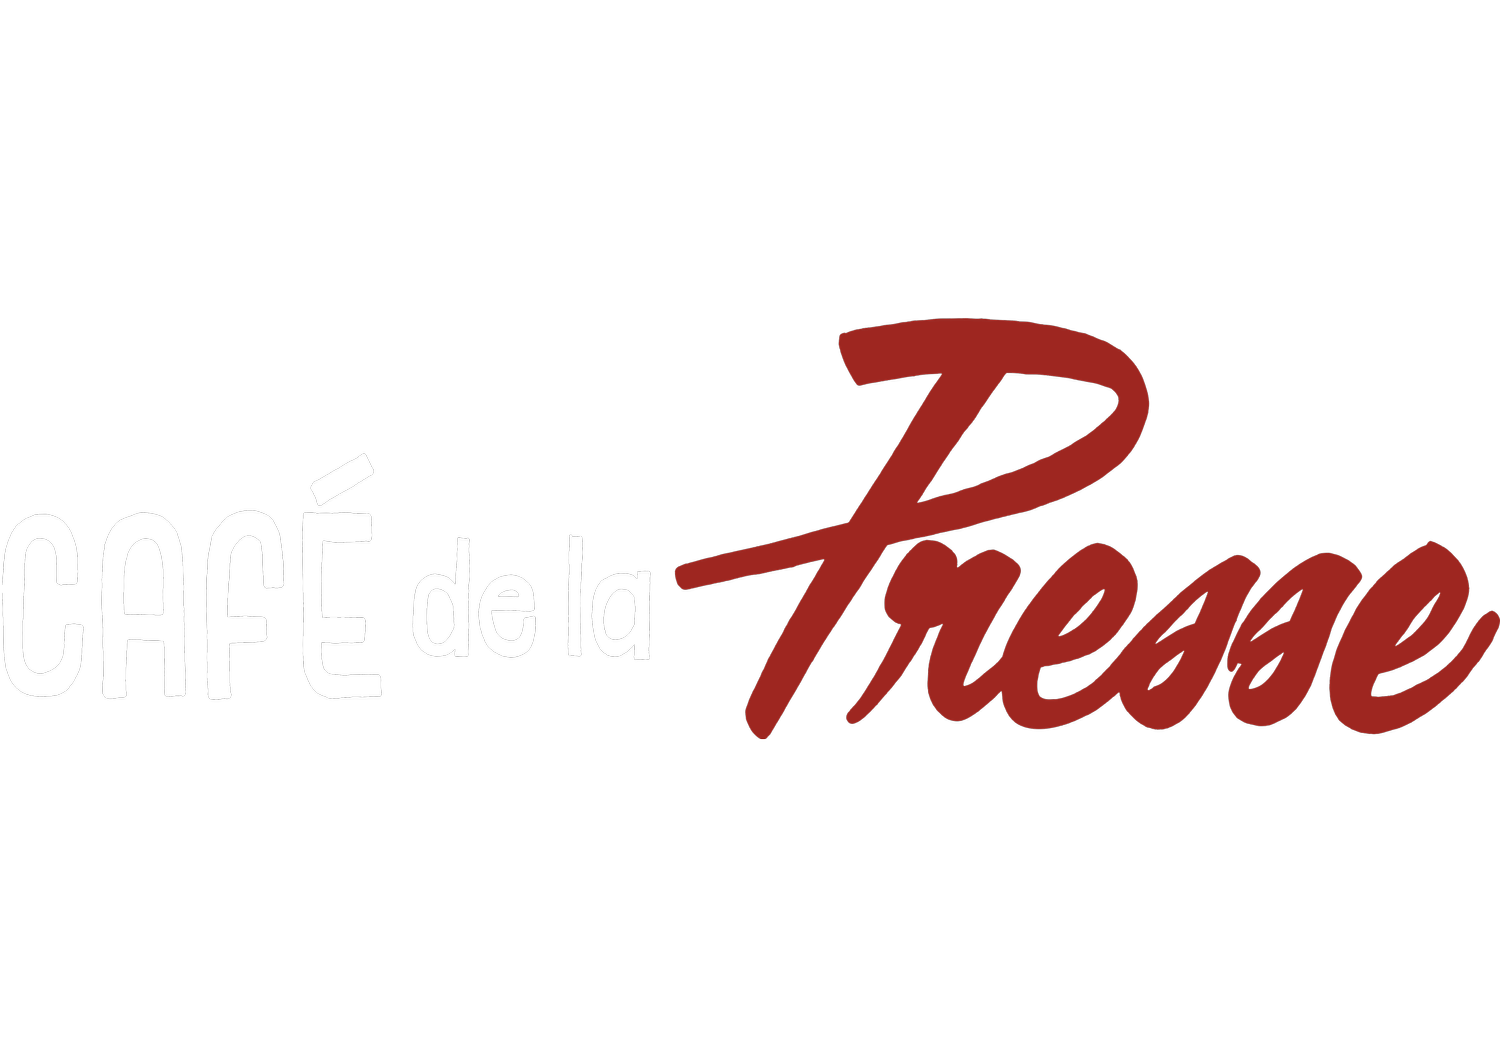 Café de la Presse